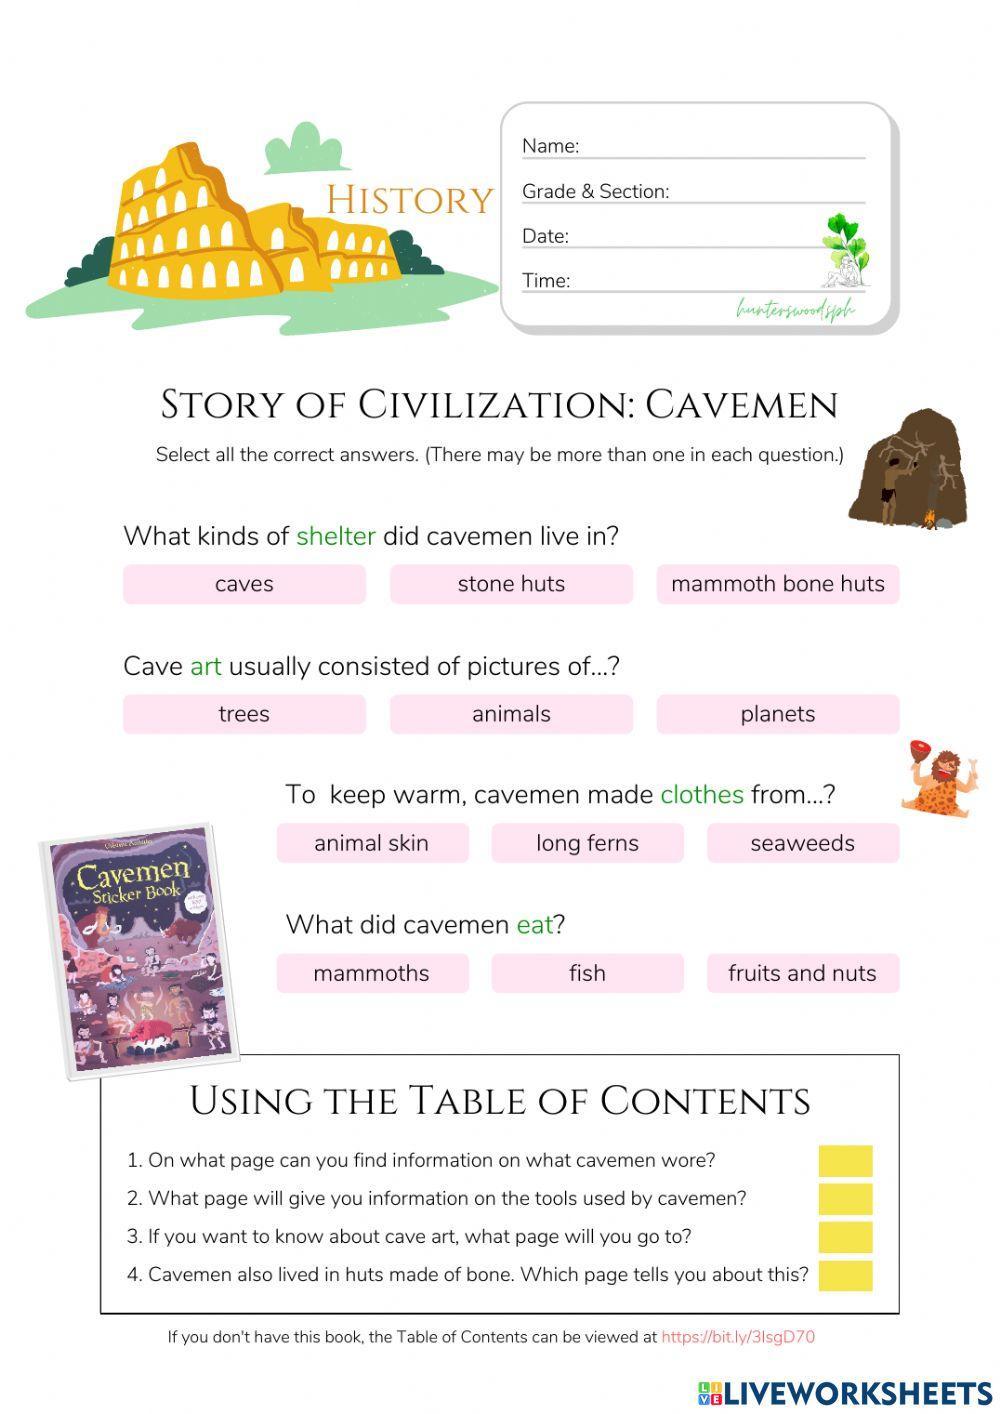 Story of Civilization: Cavemen (HuntersWoodsPH Montessori History)